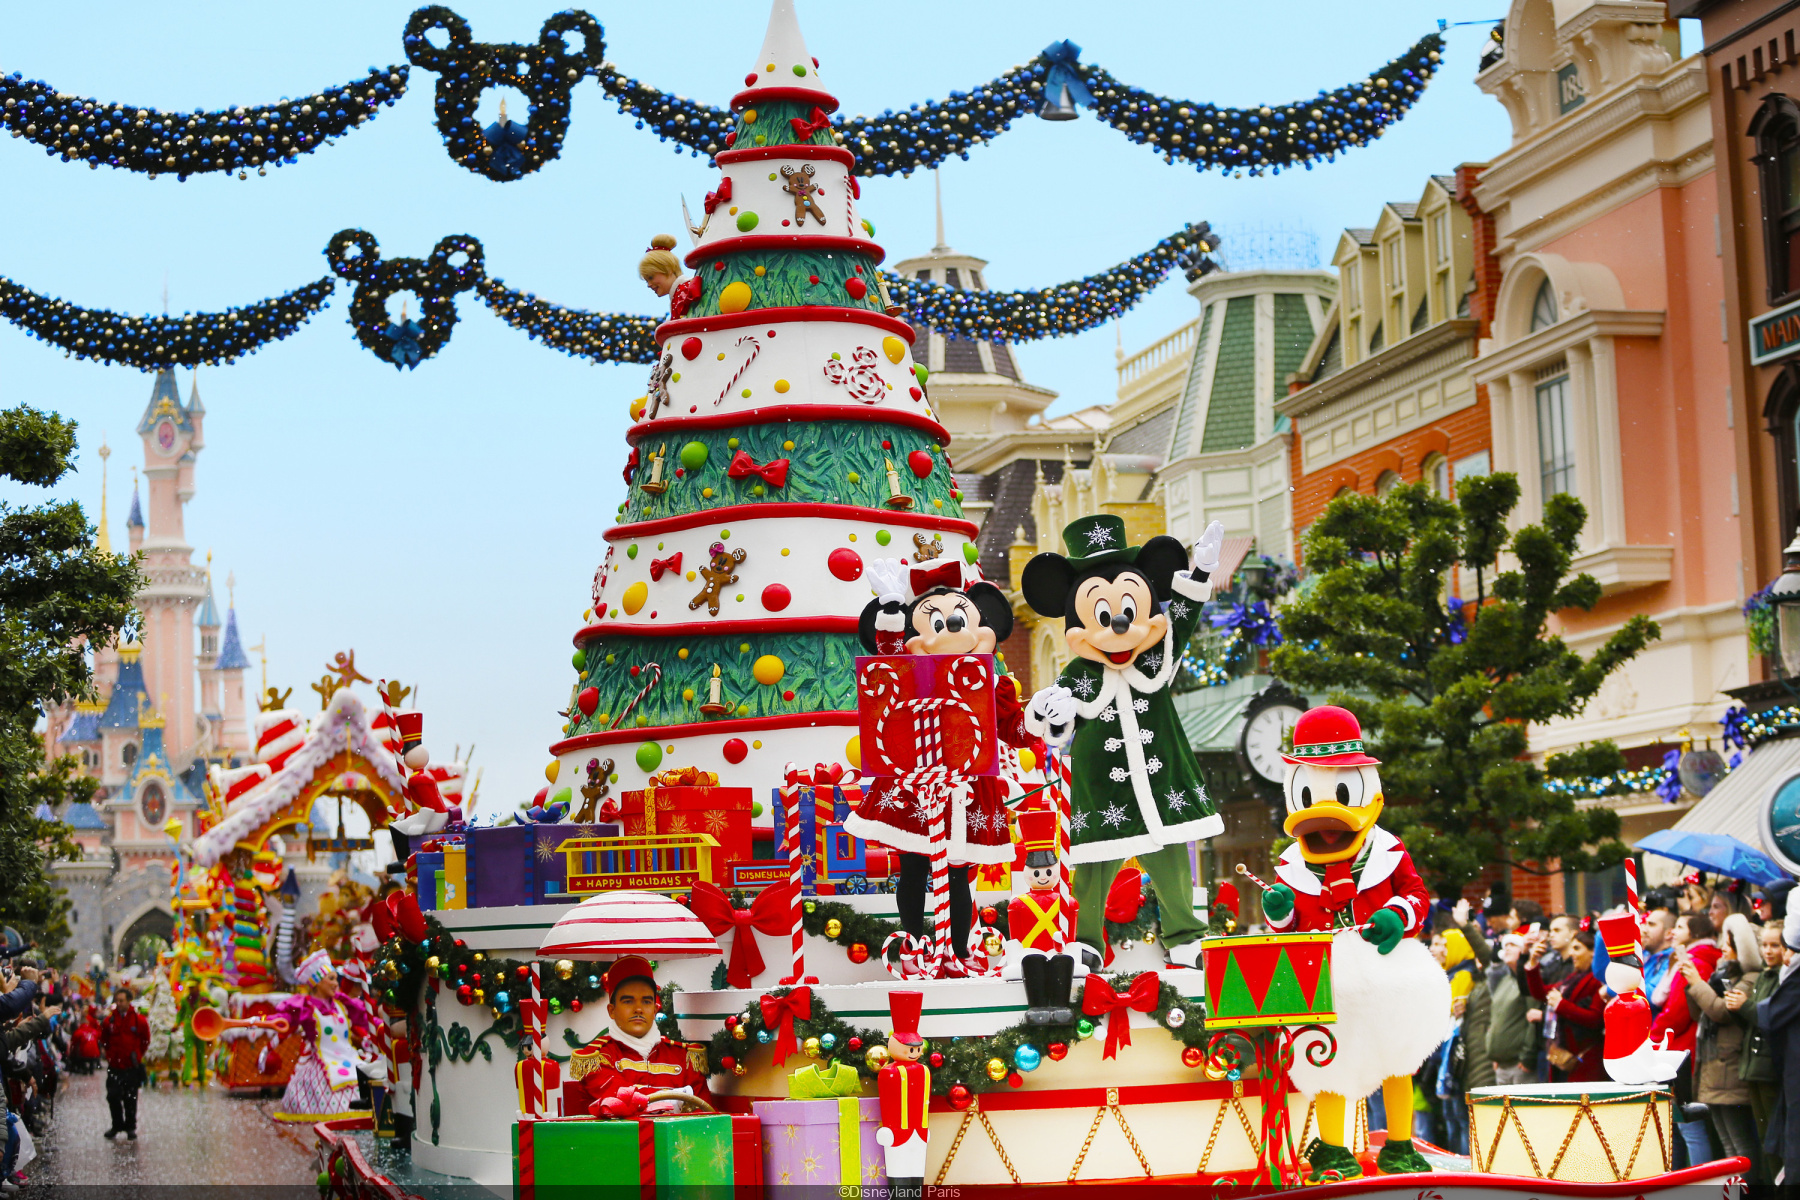 Le Noël de Mickey - Bande-annonce